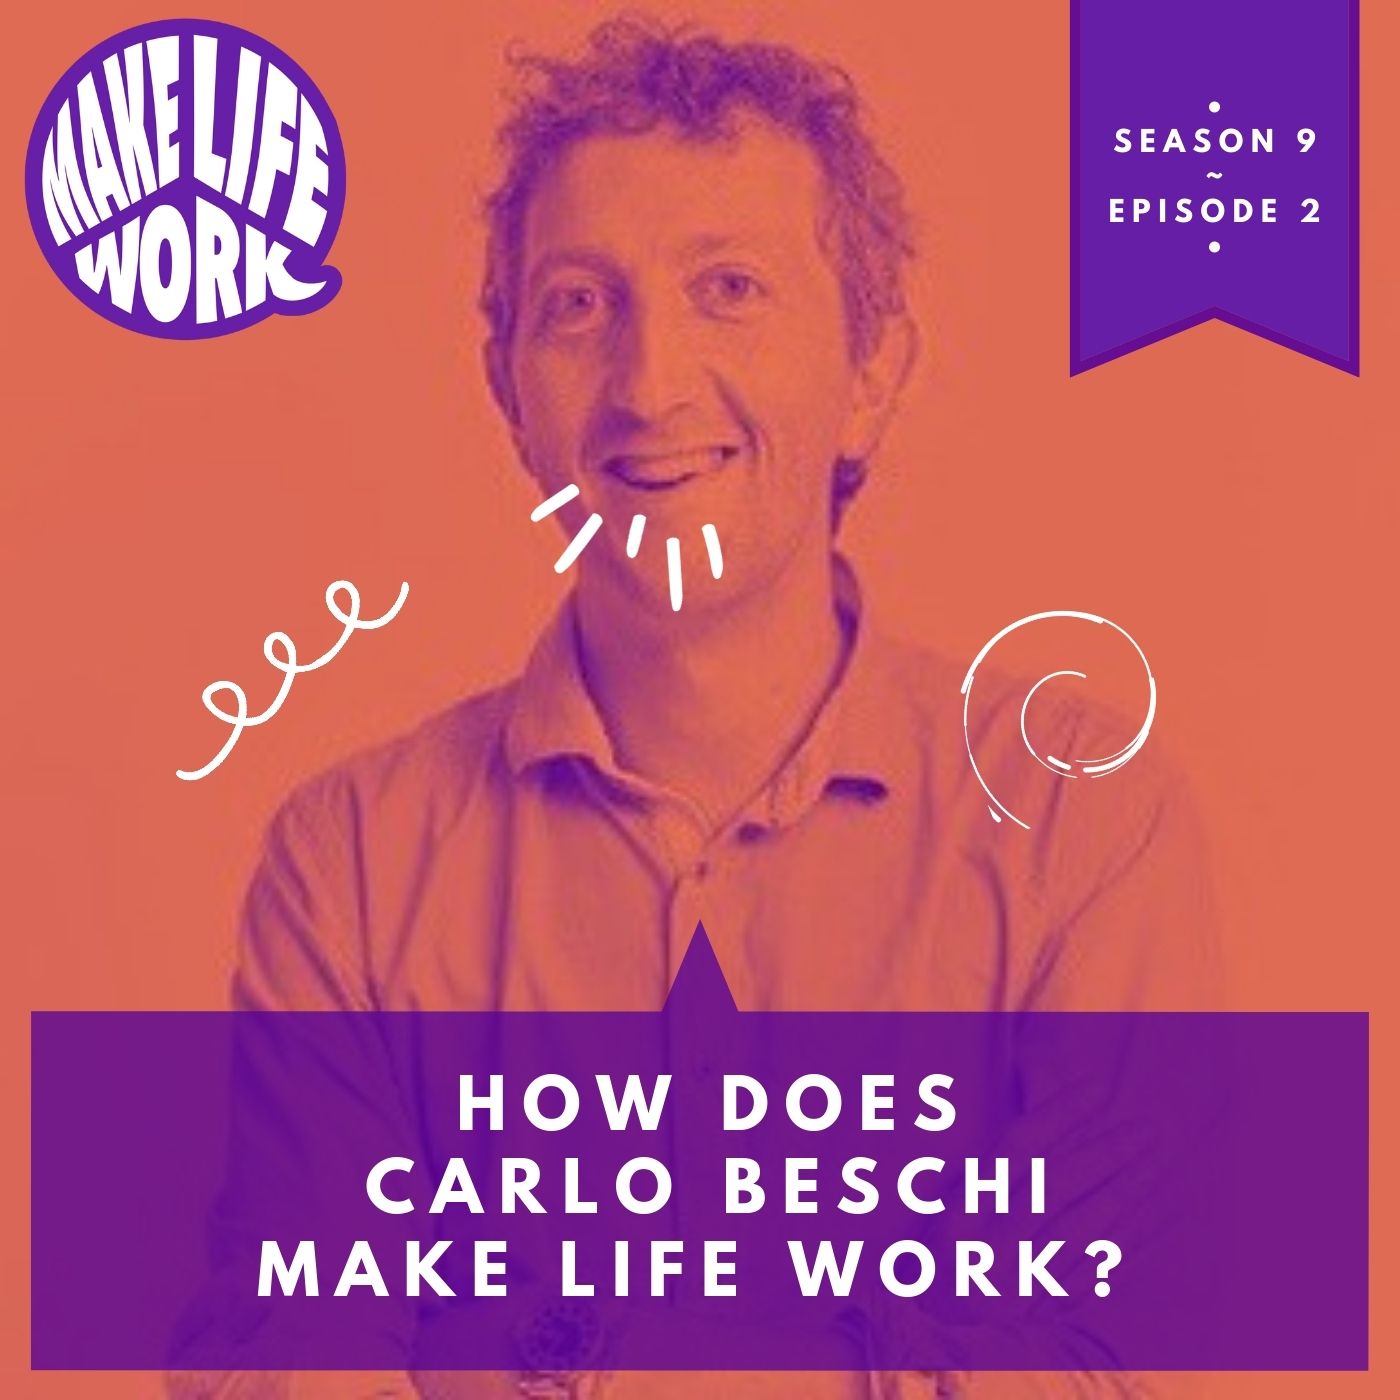 How does Carlo Beschi make life work?